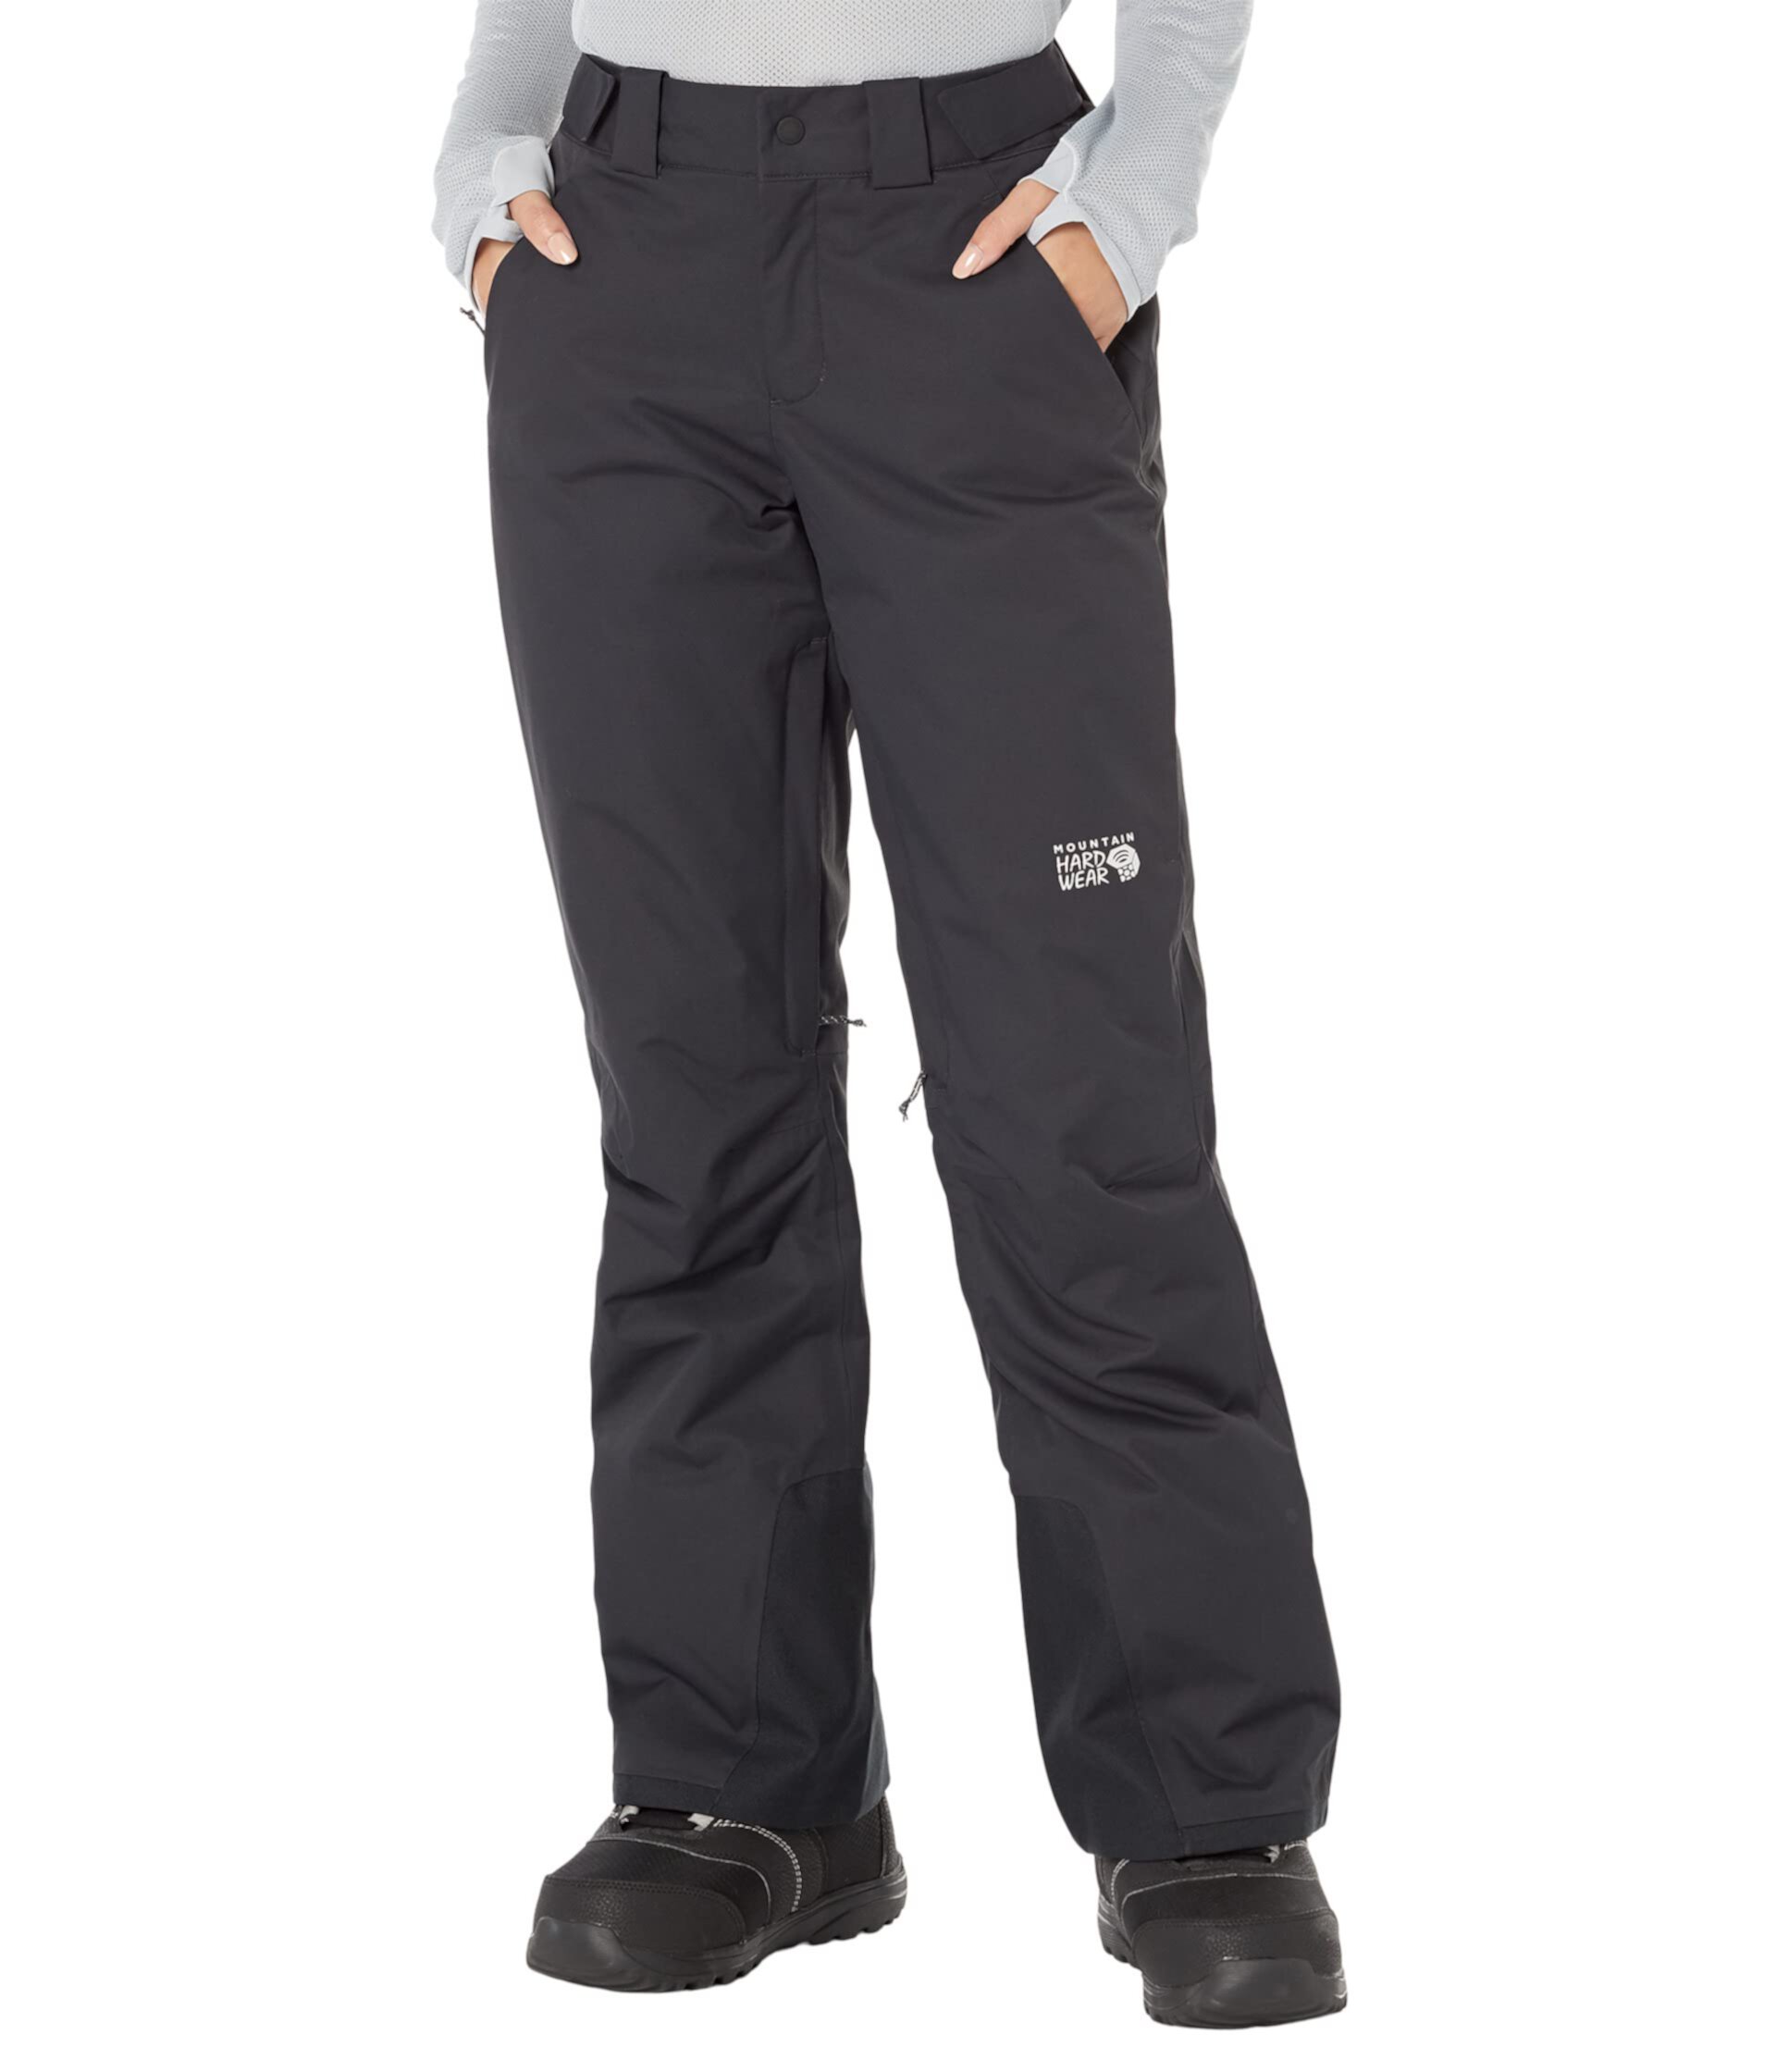 Утепленные брюки FireFall/2™ Mountain Hardwear